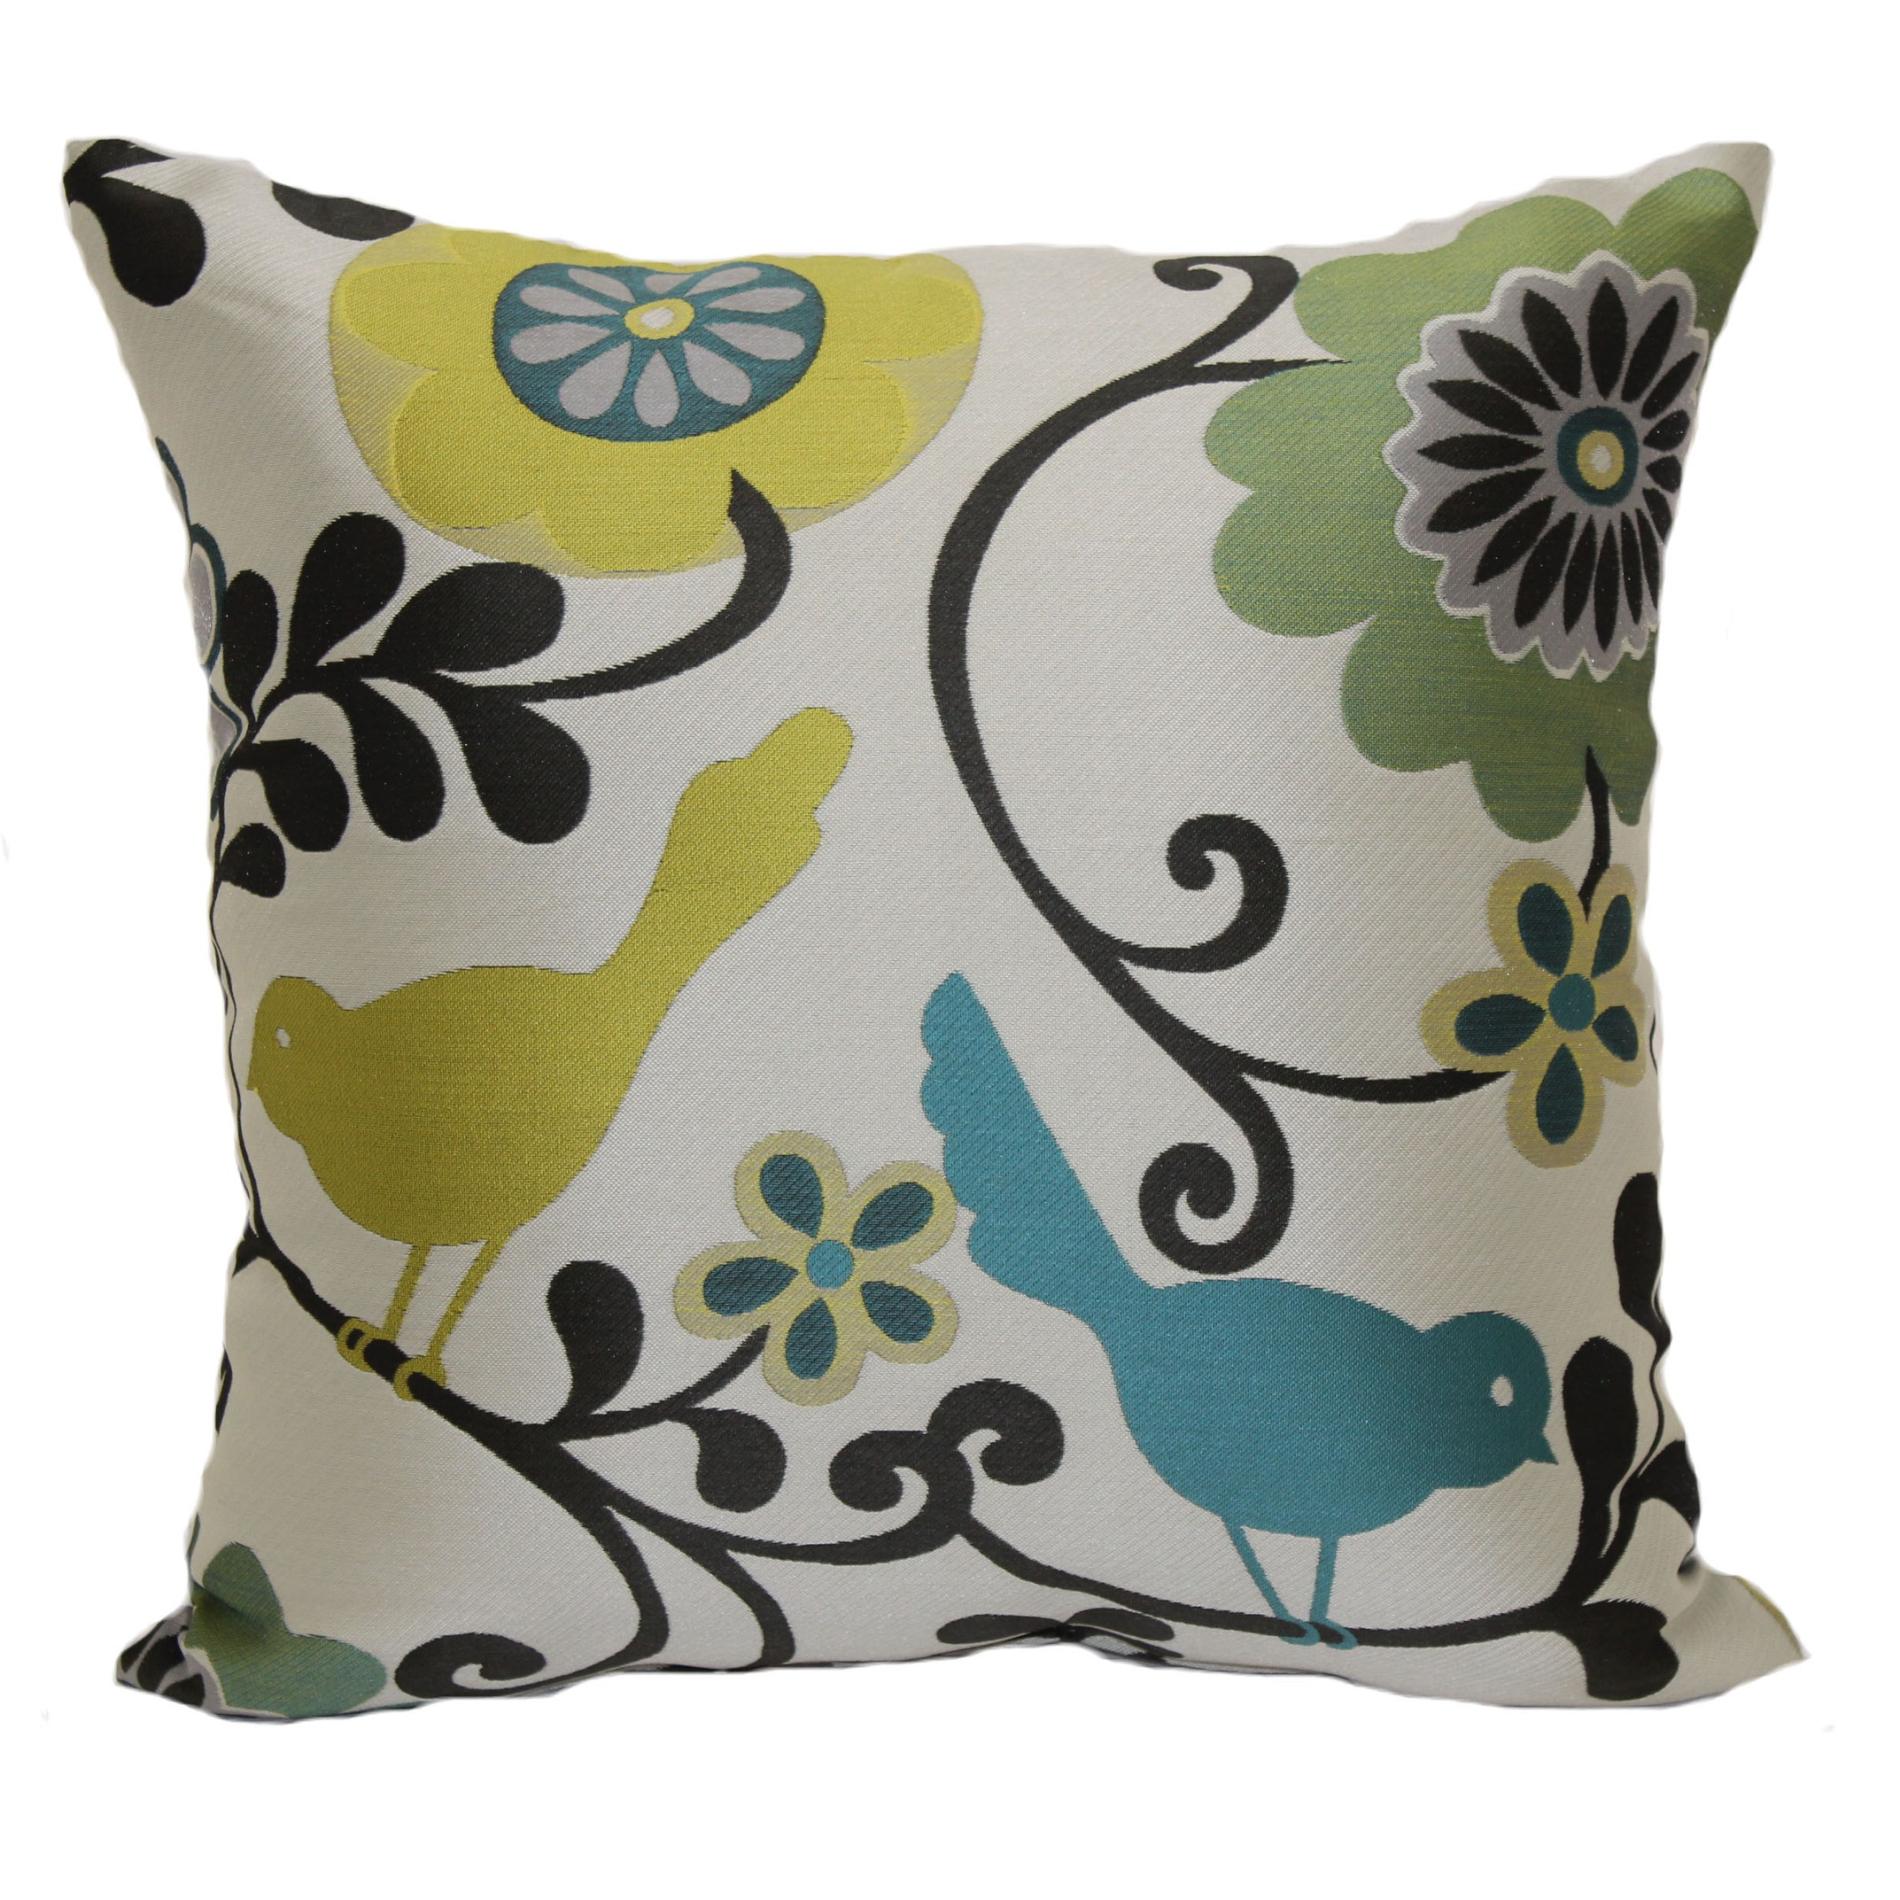 Decorative Throw Pillow - Birds & Flowers